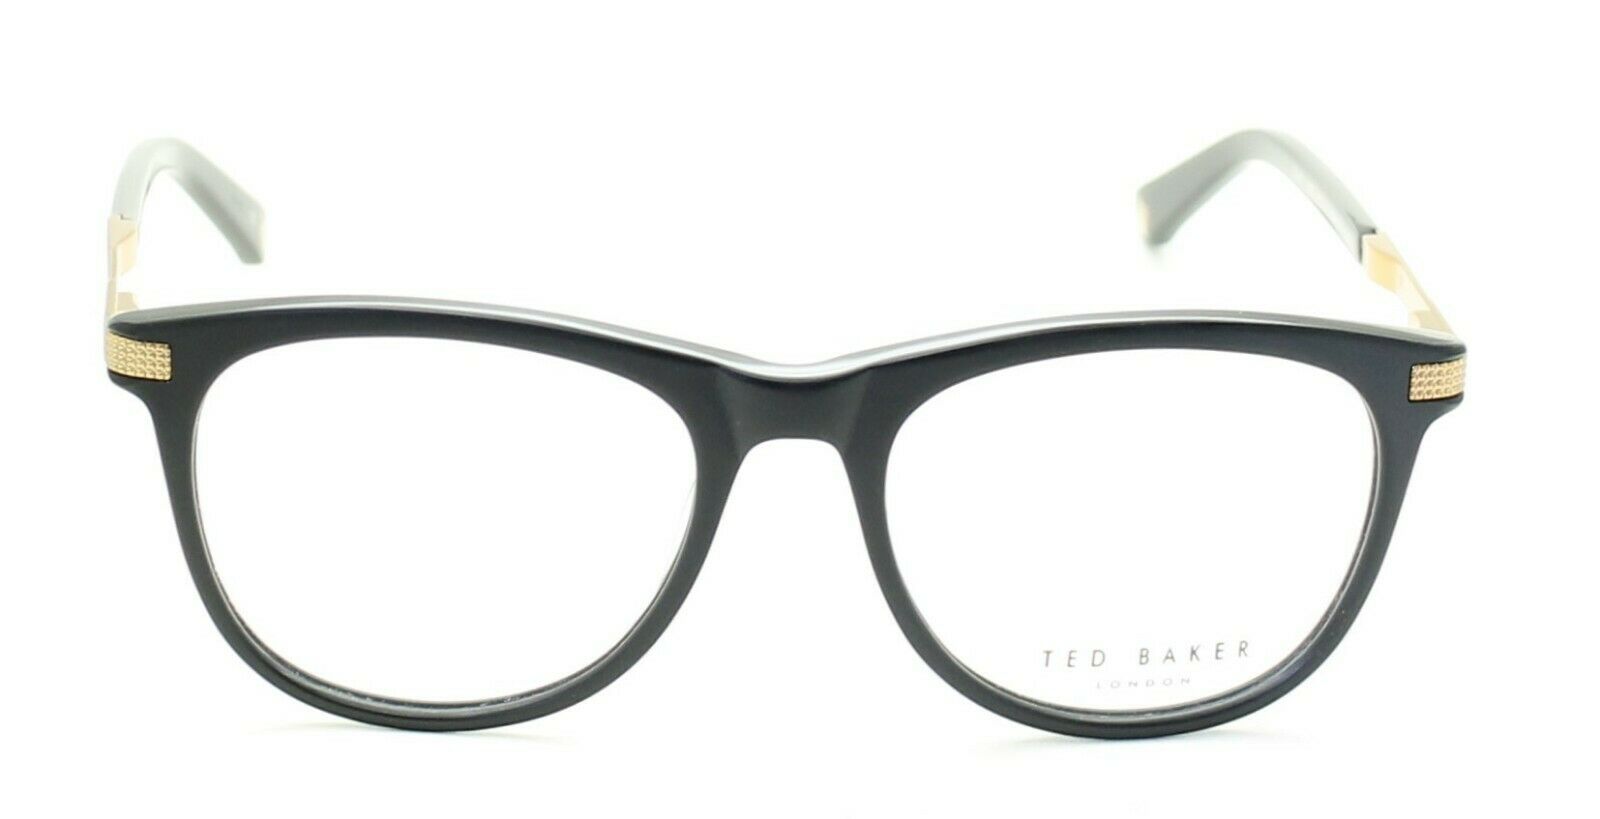 TED BAKER 8176 001 Zach 52mm Eyewear FRAMES Glasses RX Optical Eyeglasses - New